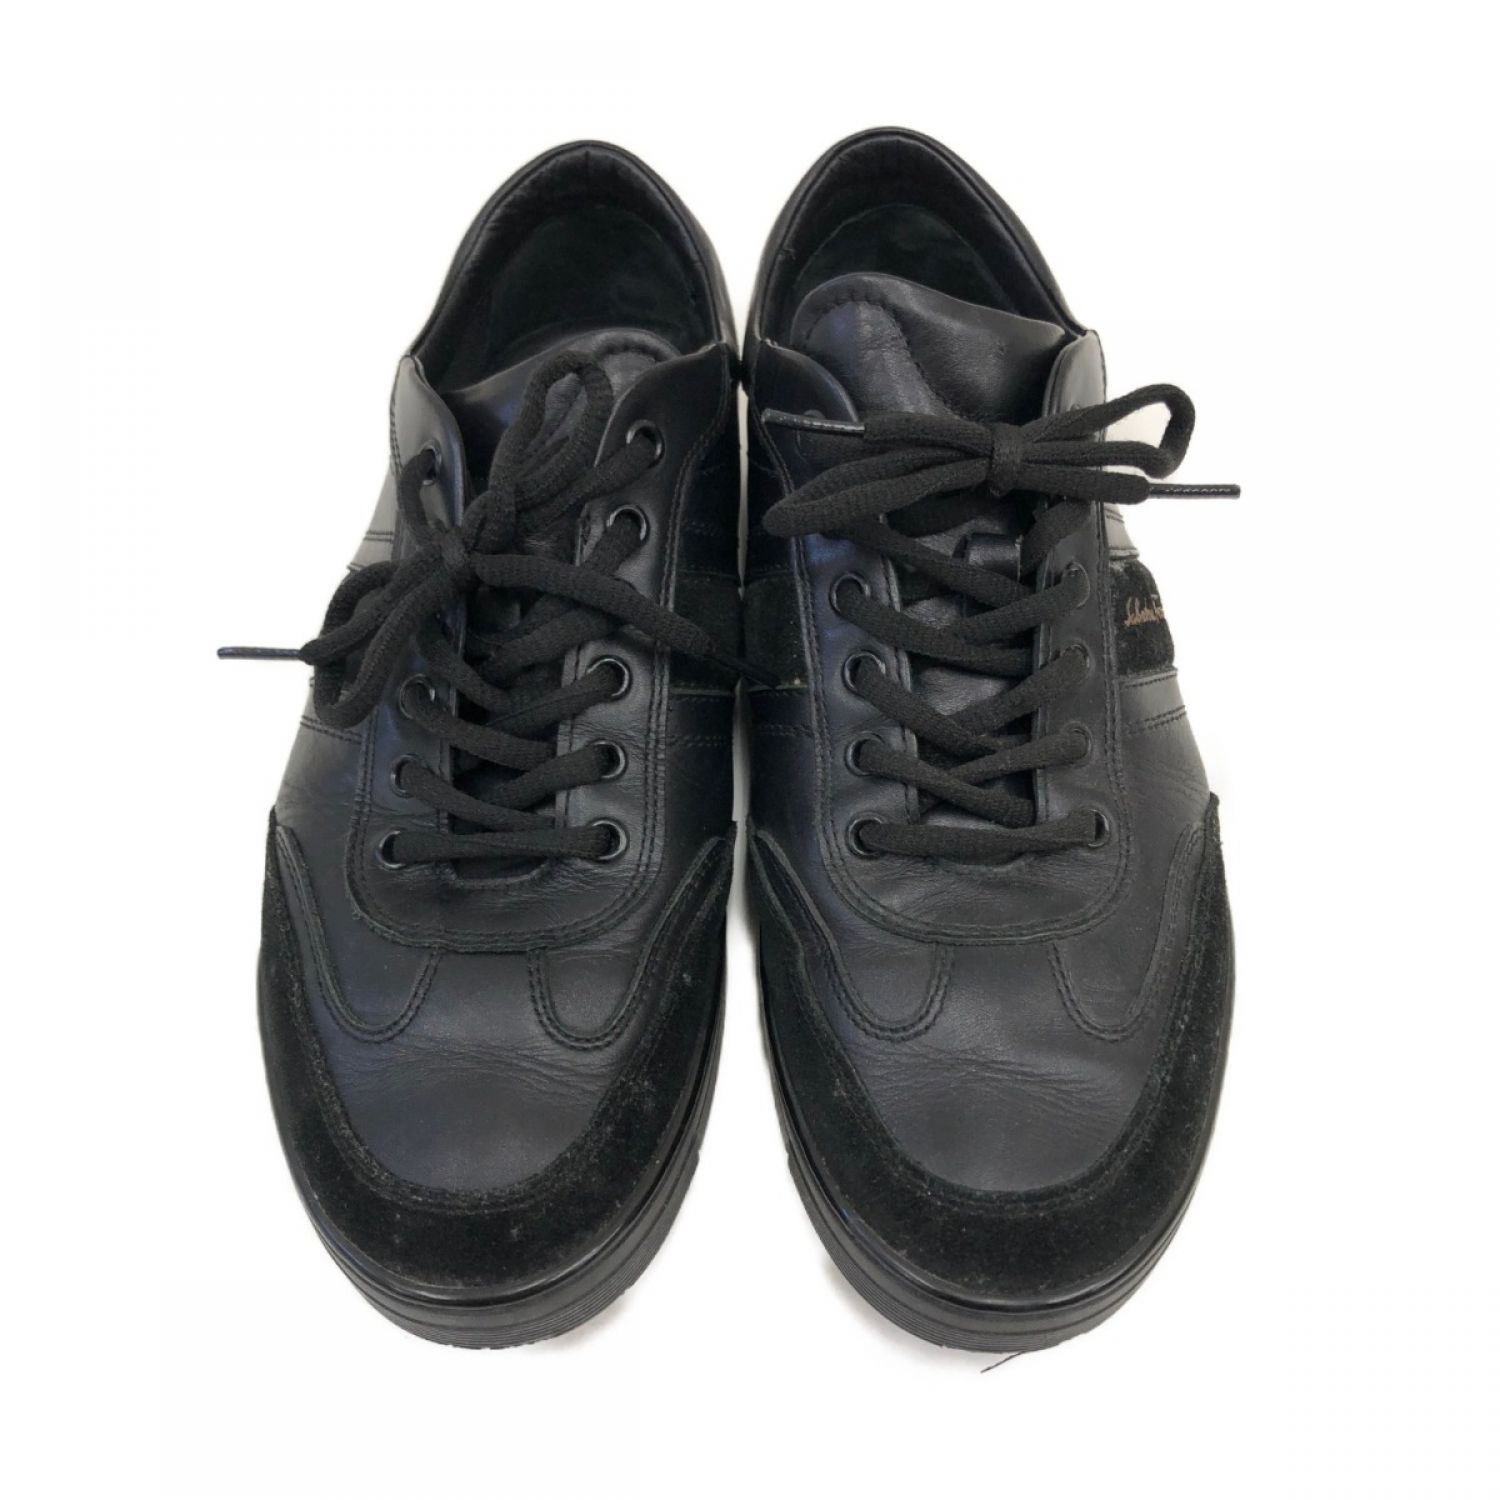 〇〇Salvatore Ferragamo サルヴァトーレフェラガモ 靴 スニーカー 表記サイズ7 1/2 33054 ブラック